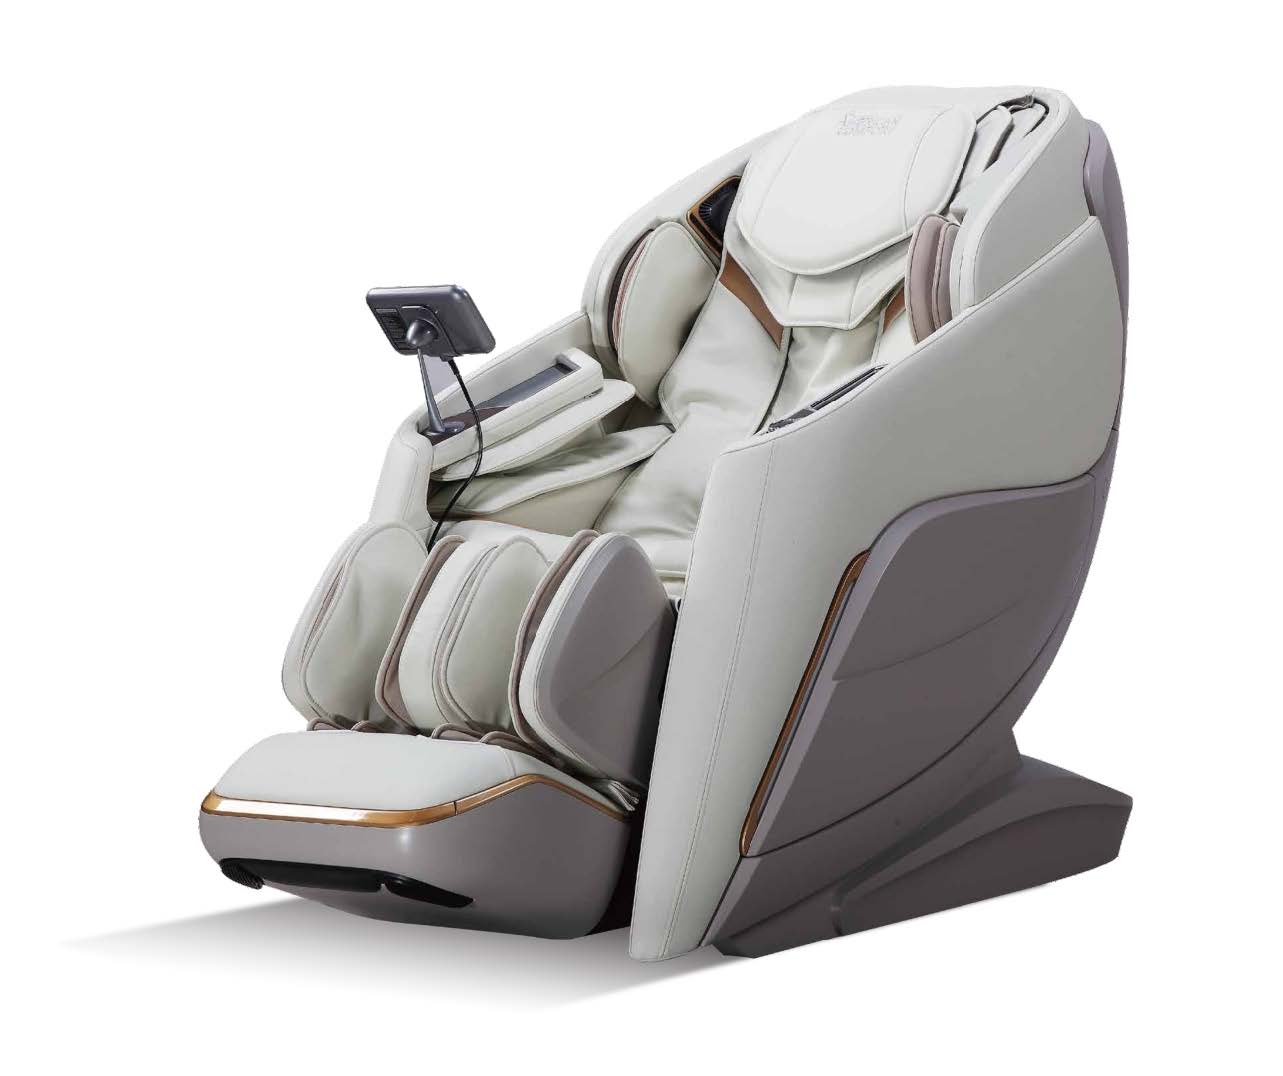 5D Massage Chair in kashipur, 5D Massage Chair Manufacturers